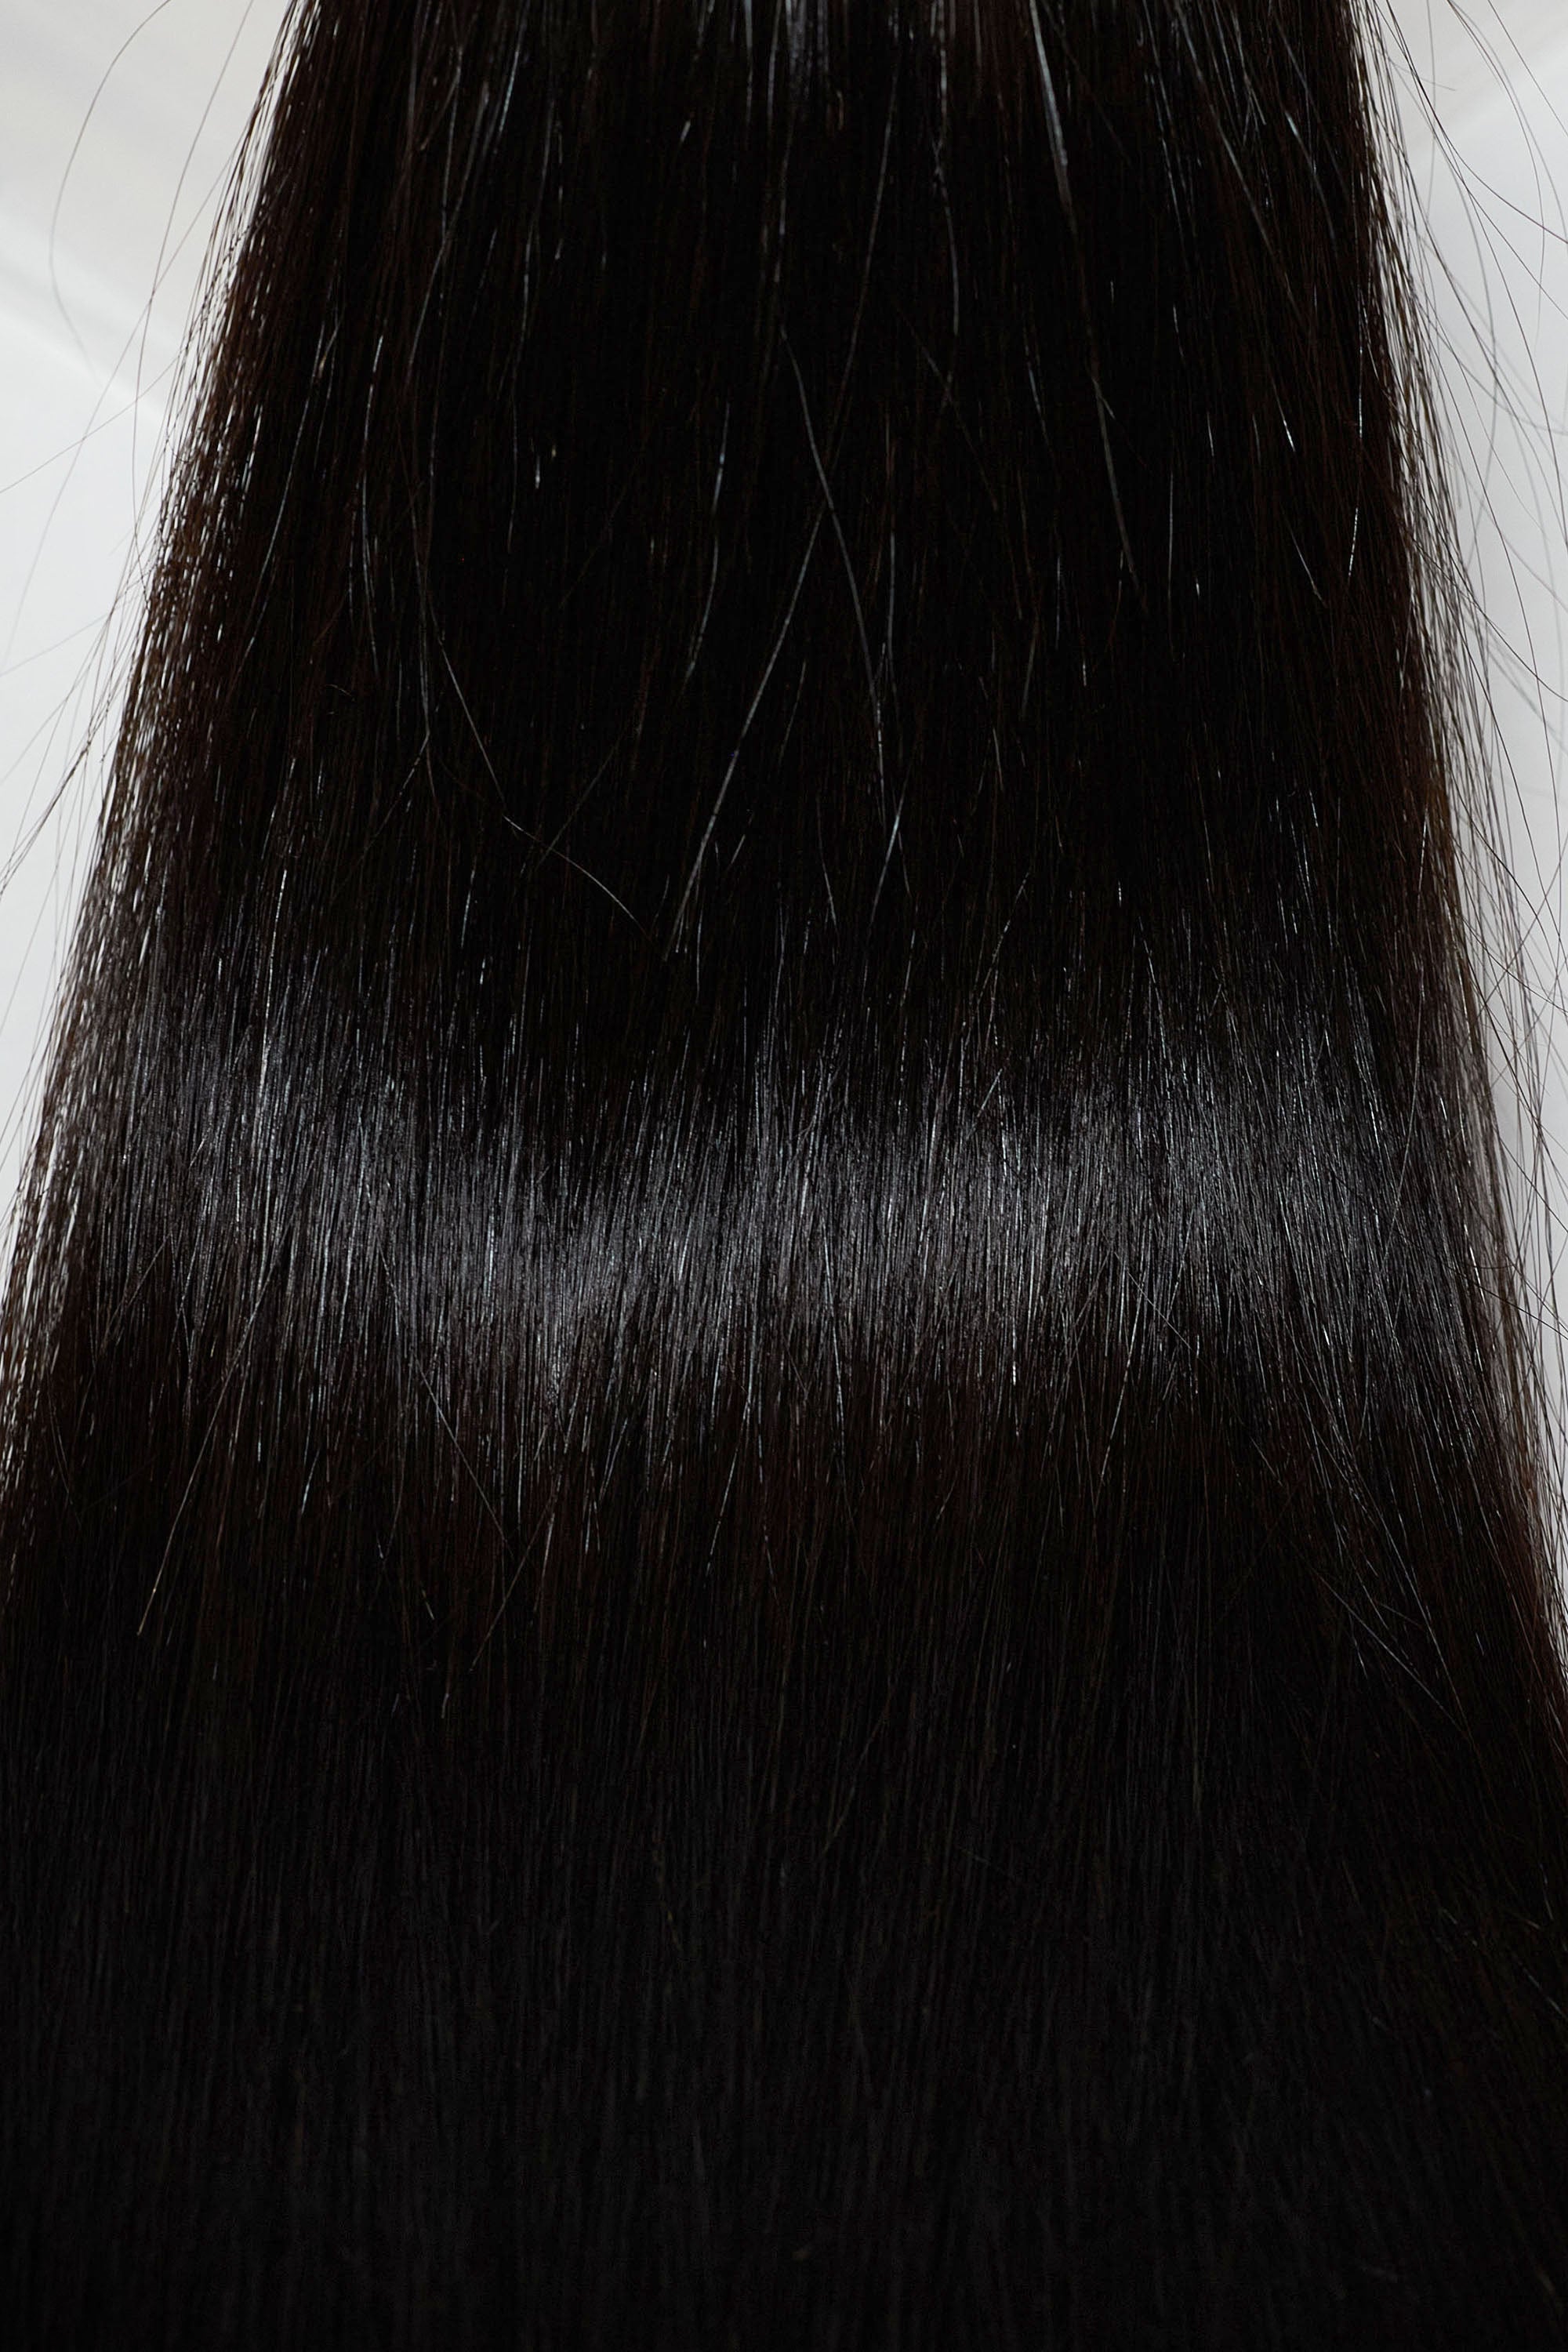 Behair professional Bulk hair "Premium" 28" (70cm) Natural Straight Jet Black #1 - 25g hair extensions